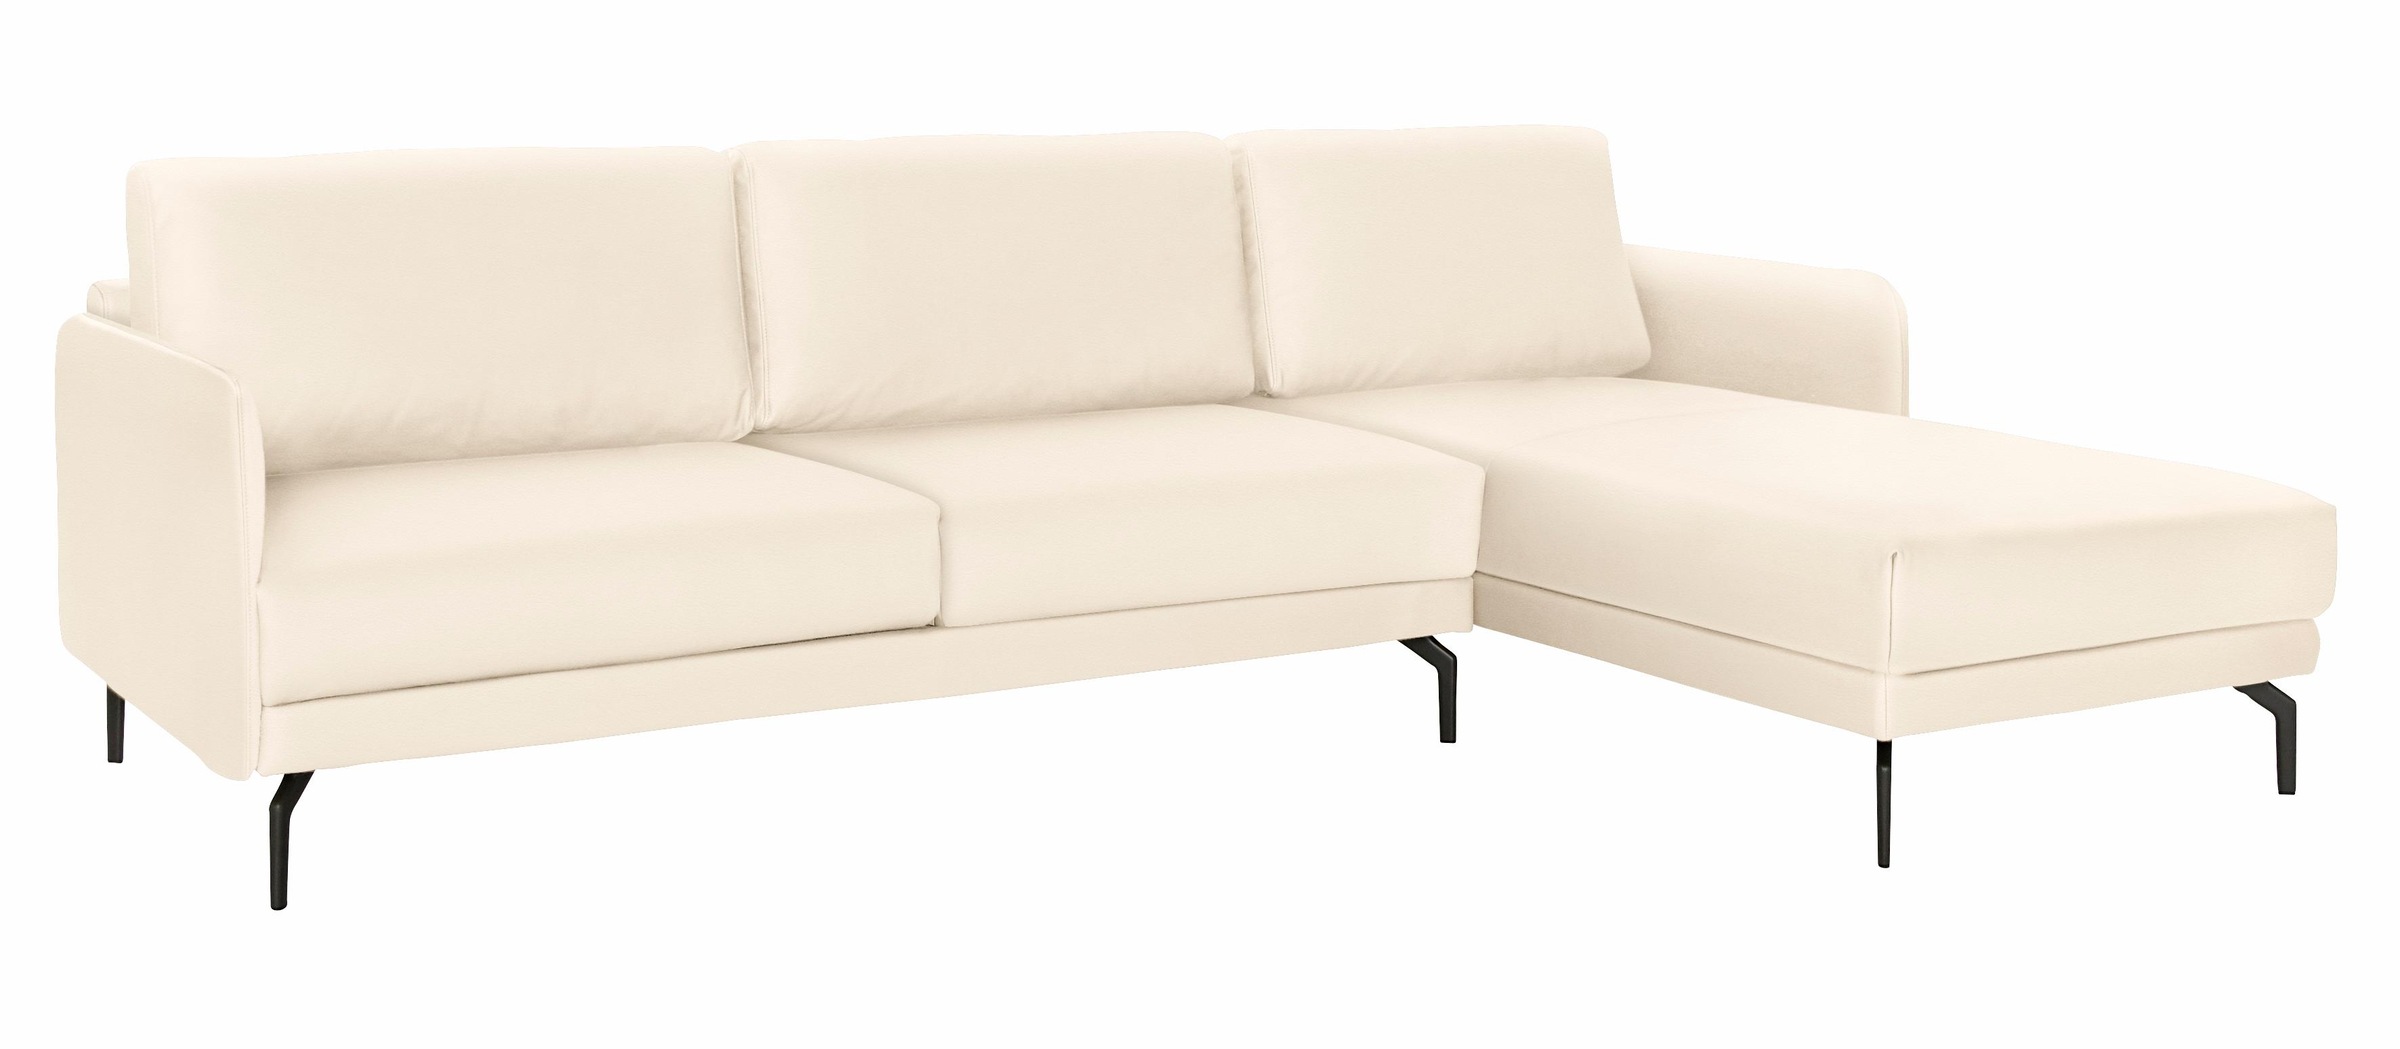 hülsta sofa Ecksofa Armlehne kaufen »hs.450«, Alugussfuß BAUR | Umbragrau Breite schmal, sehr cm, 274